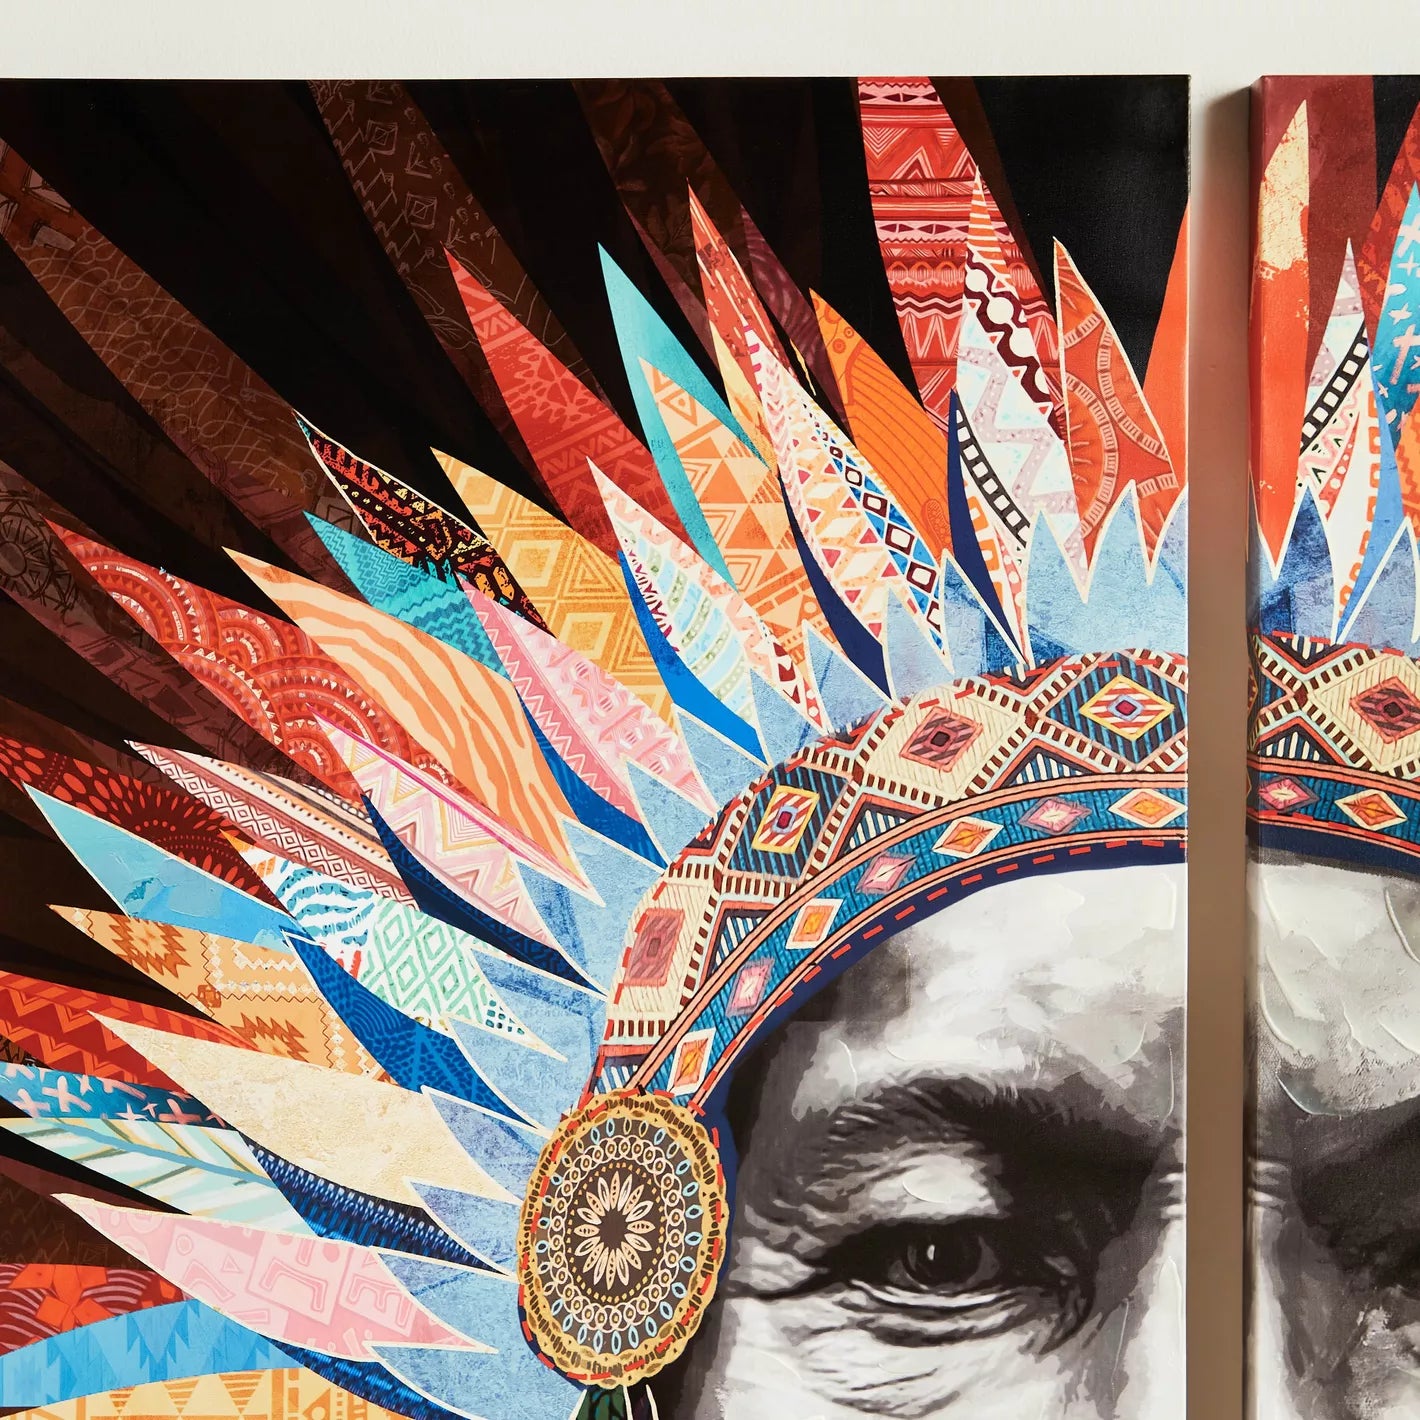 Tribal Courage 2-Piece Canvas Wall Art Set - 80x120 cm